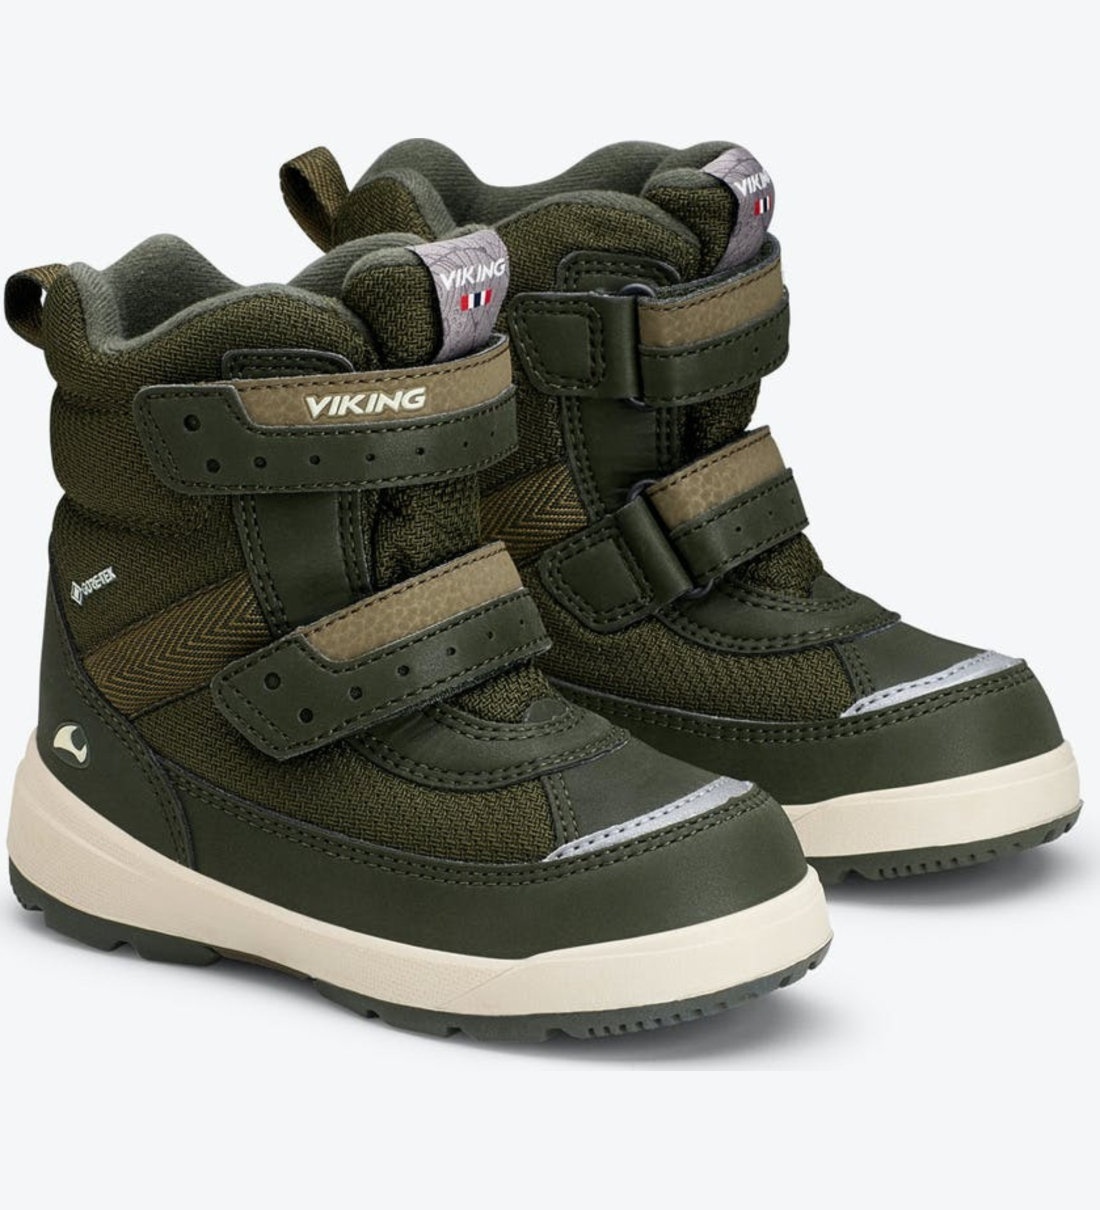 Купить ботинки Viking Play II R GTX 3-87025-24 цв. зеленый р. 25, цены наМегамаркет